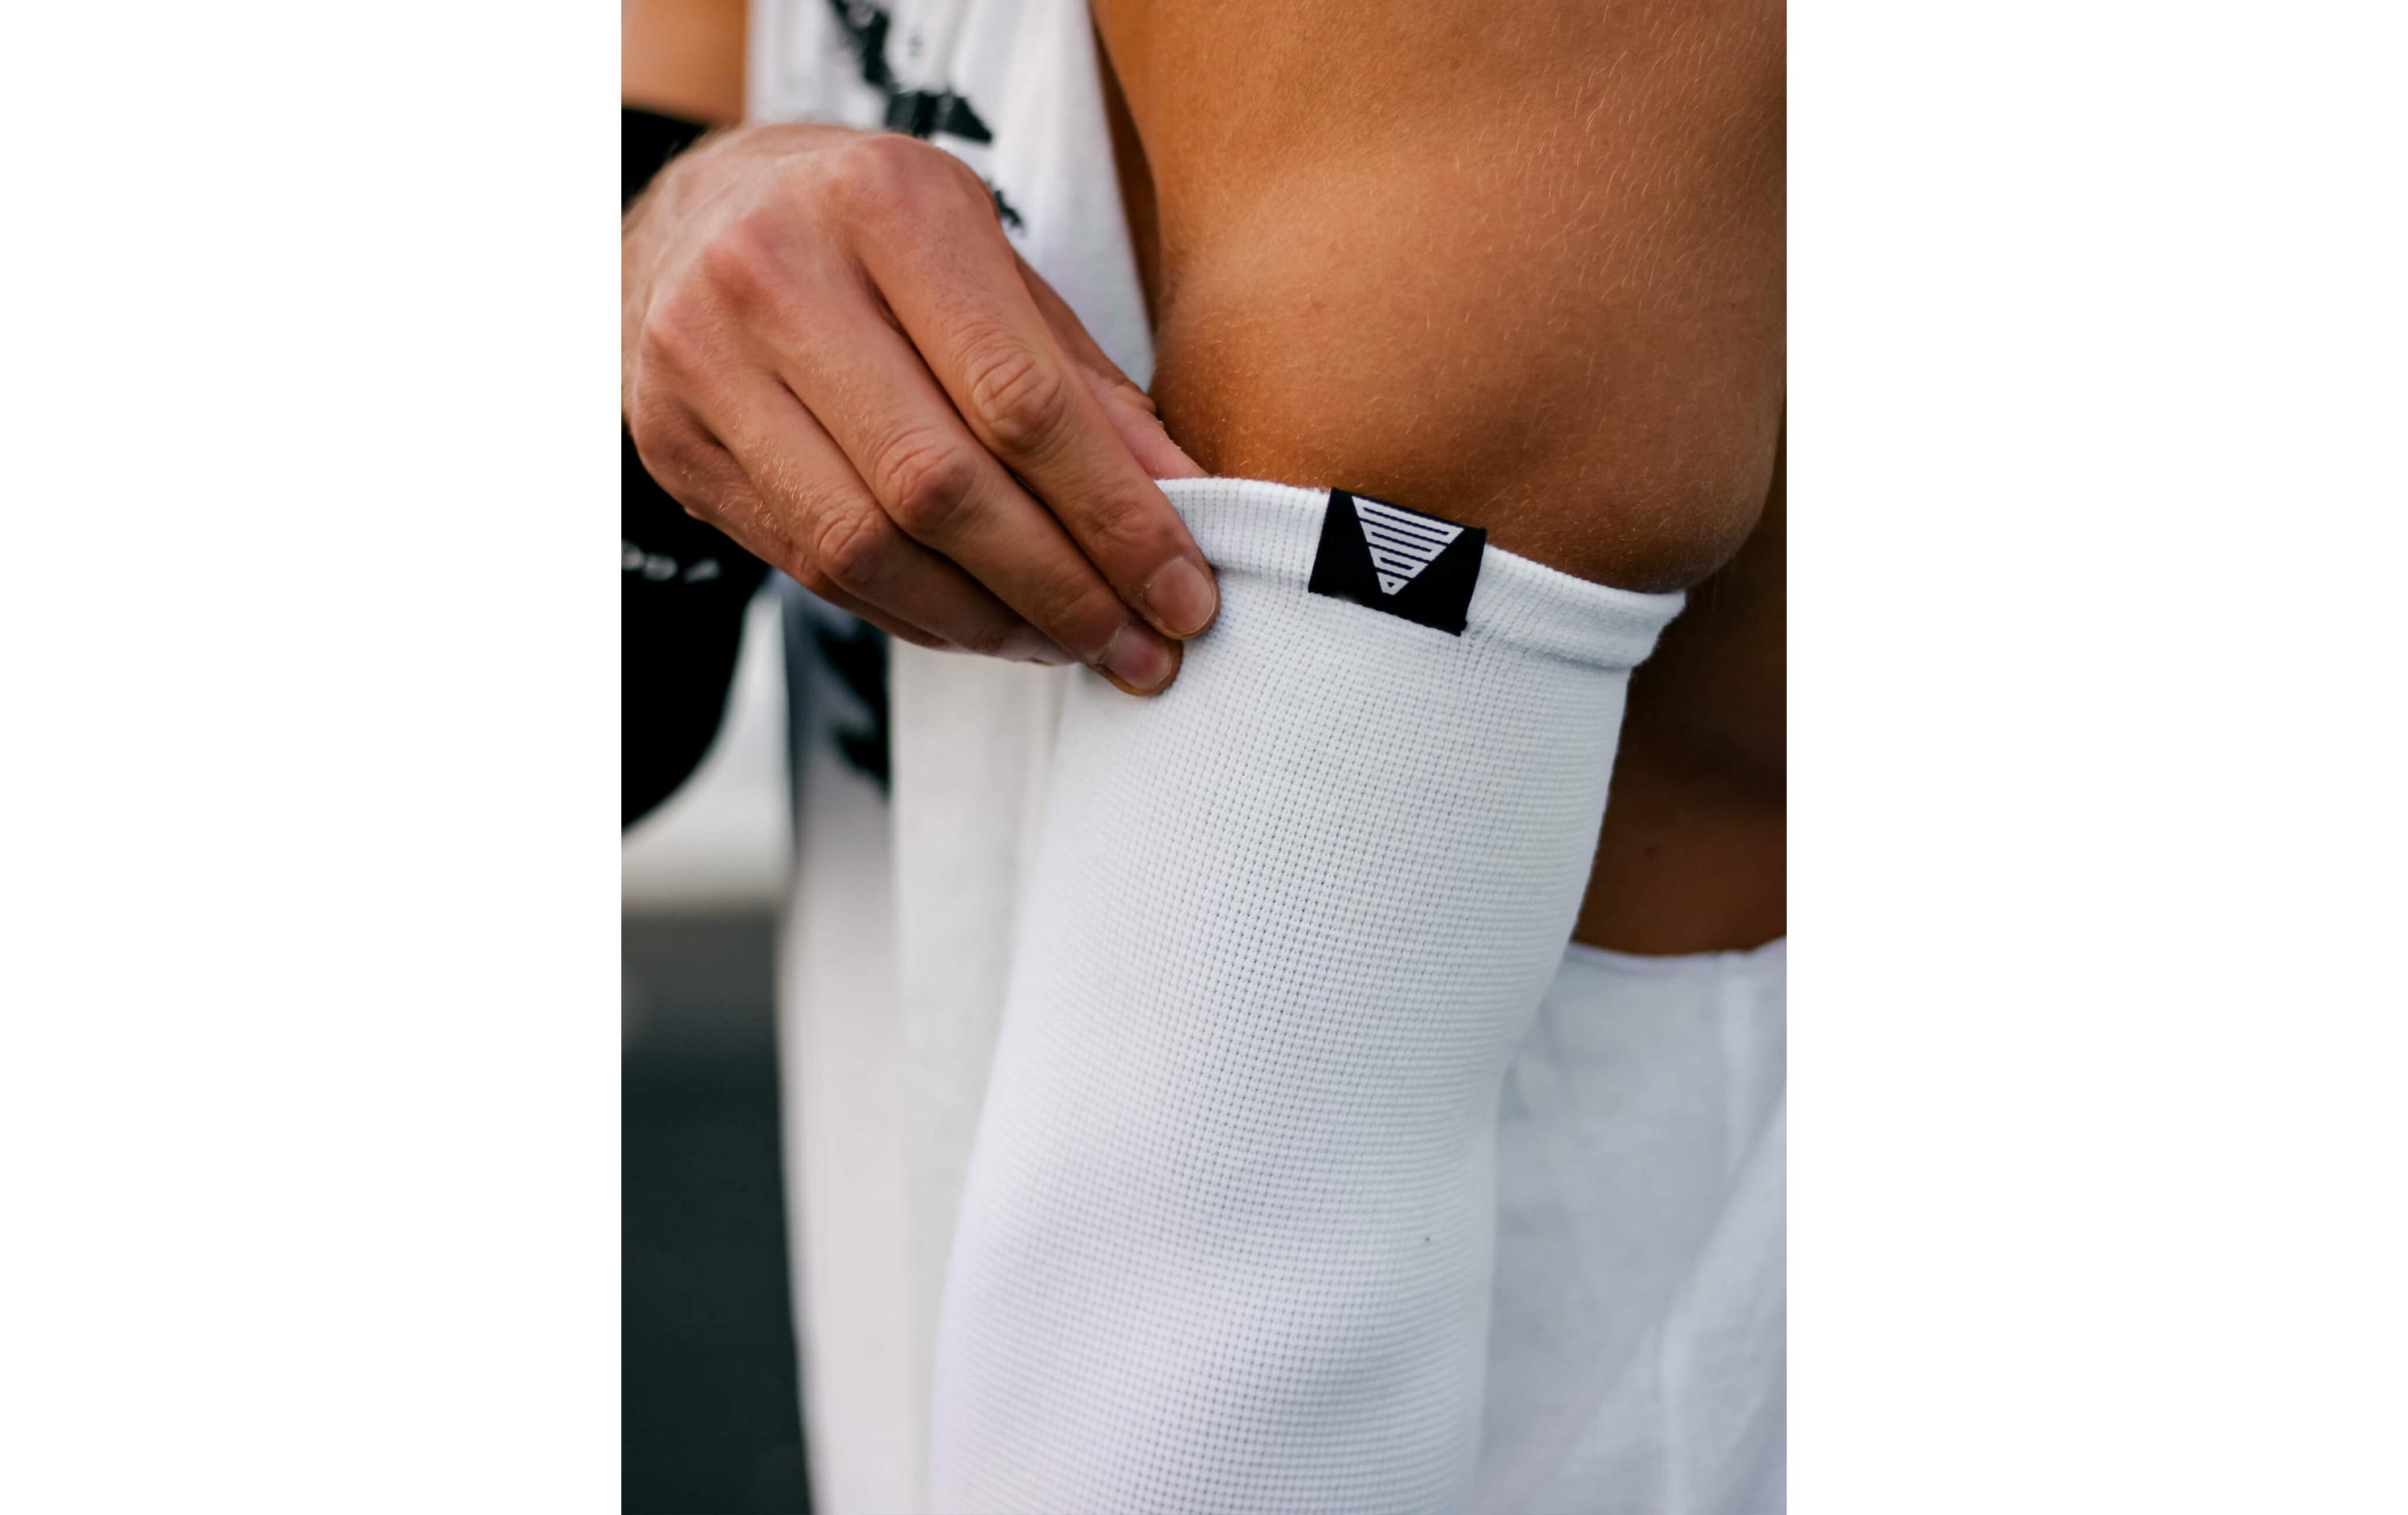 Gornation Arm Sleeve XL